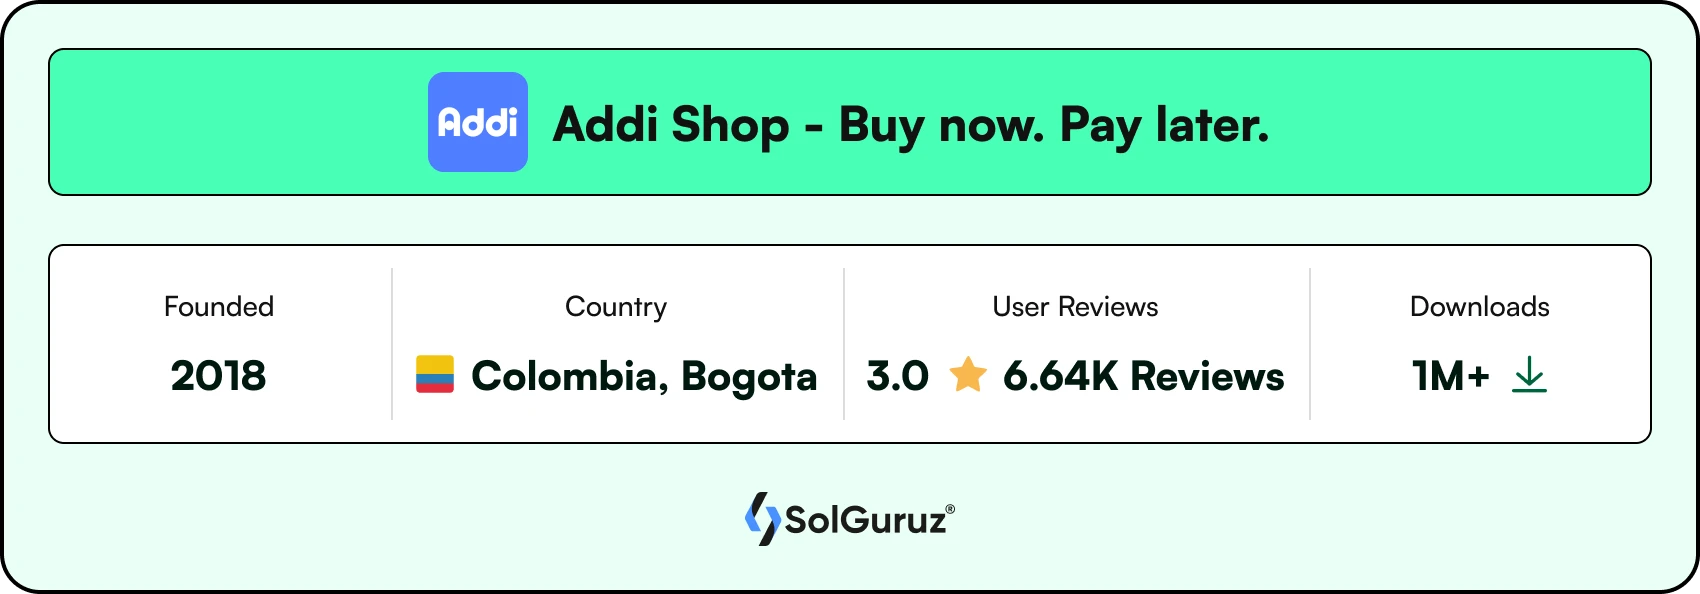 Addi Shop - Buy now Pay later app in Bogota